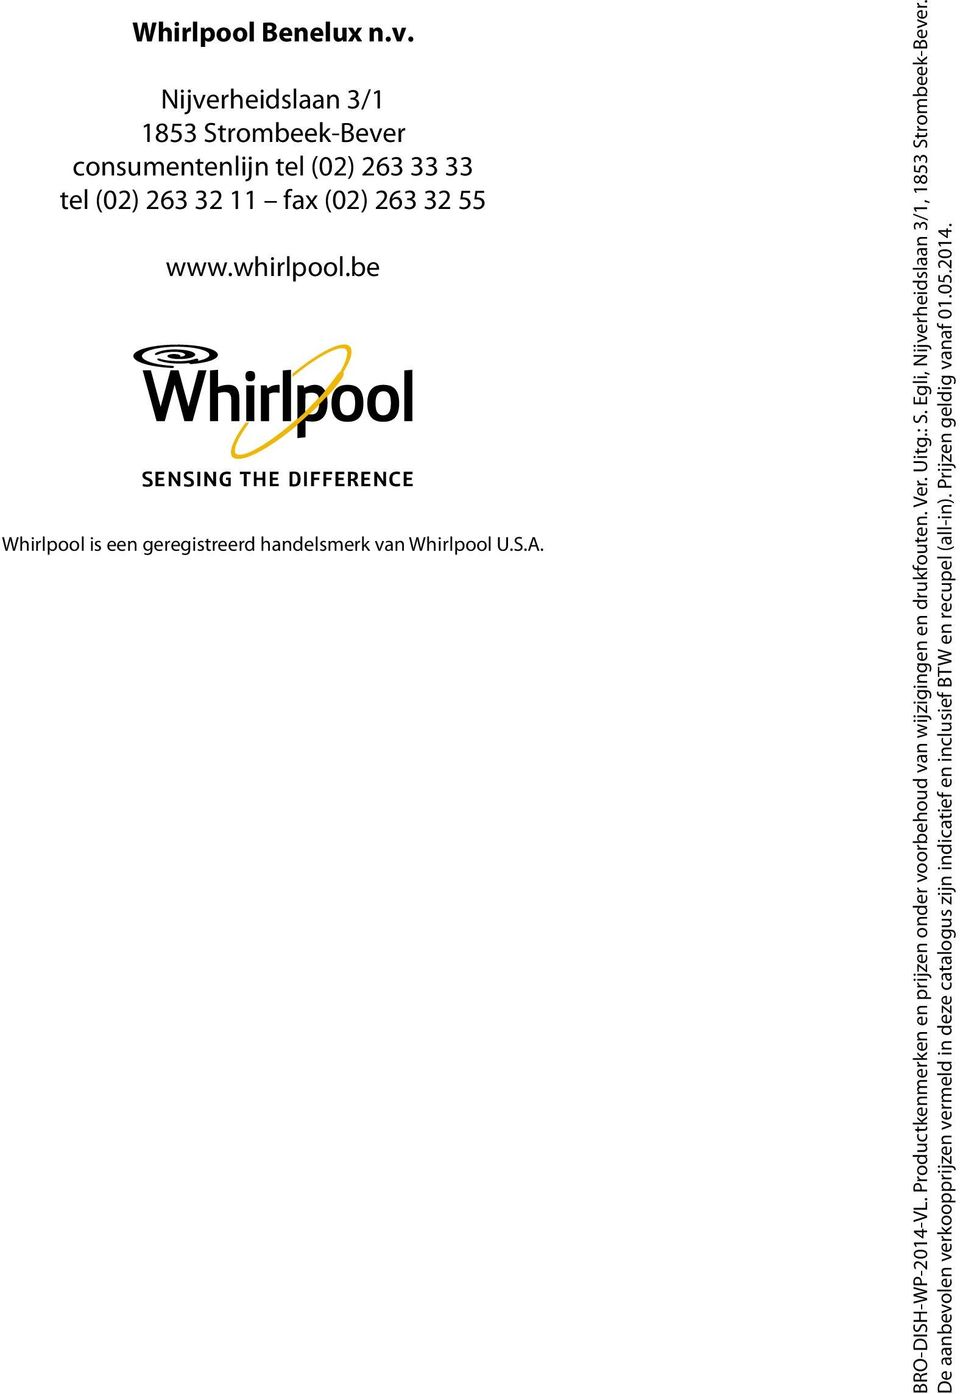 be Whirlpool is een geregistreerd handelsmerk van Whirlpool U.S.A. BRO-DISH-WP-2014-VL.